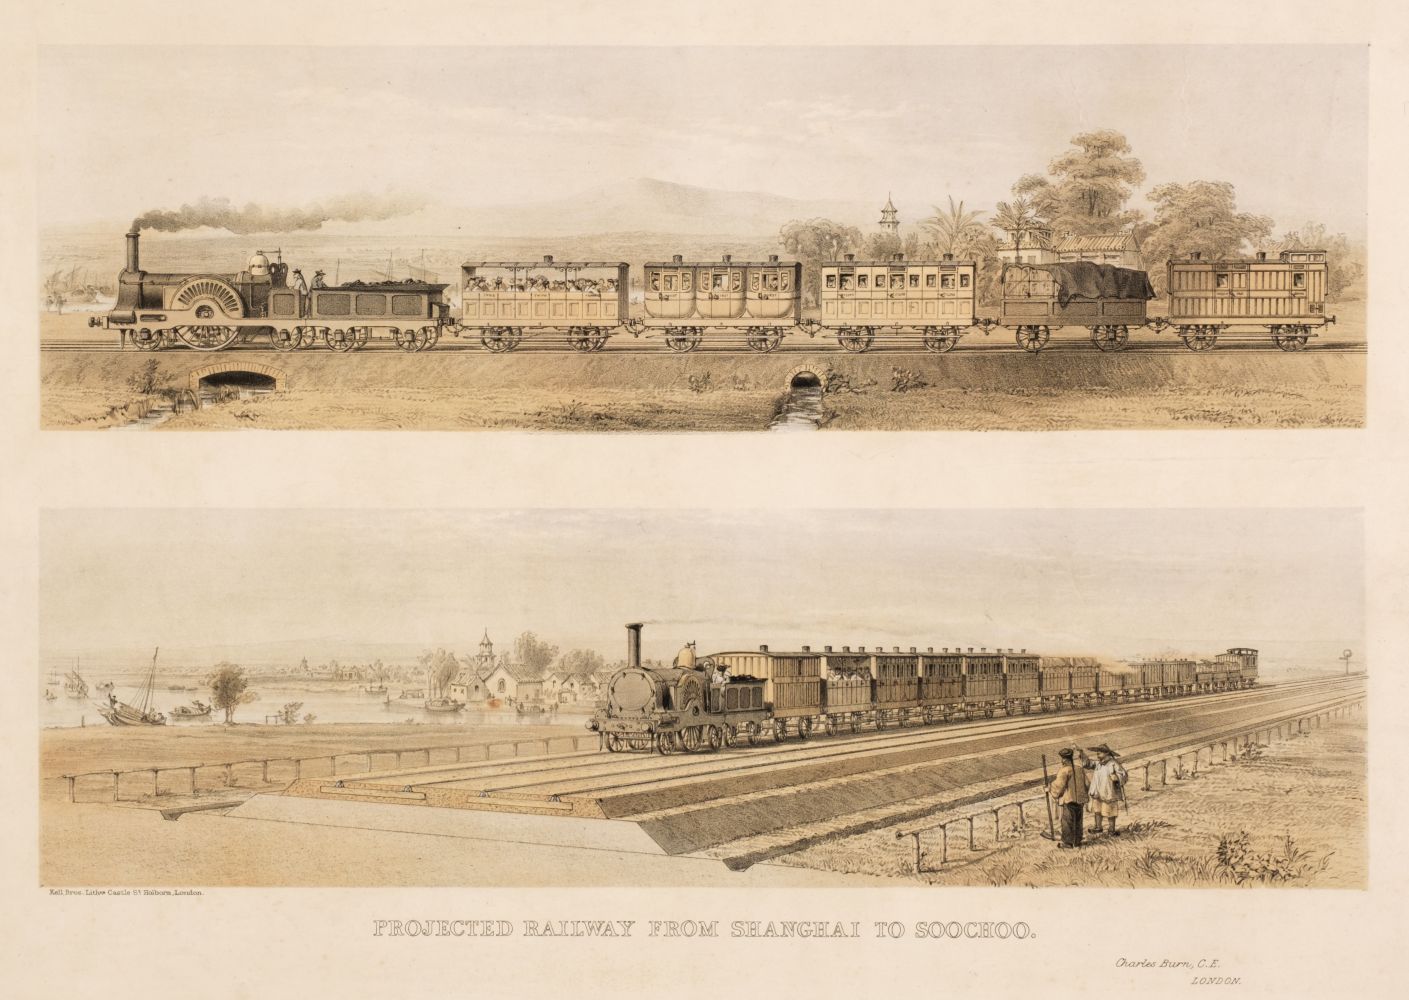 * Chinese Railway. Projected Railway from Shanghai to Soochoo, London: Charles Burn, circa 1850